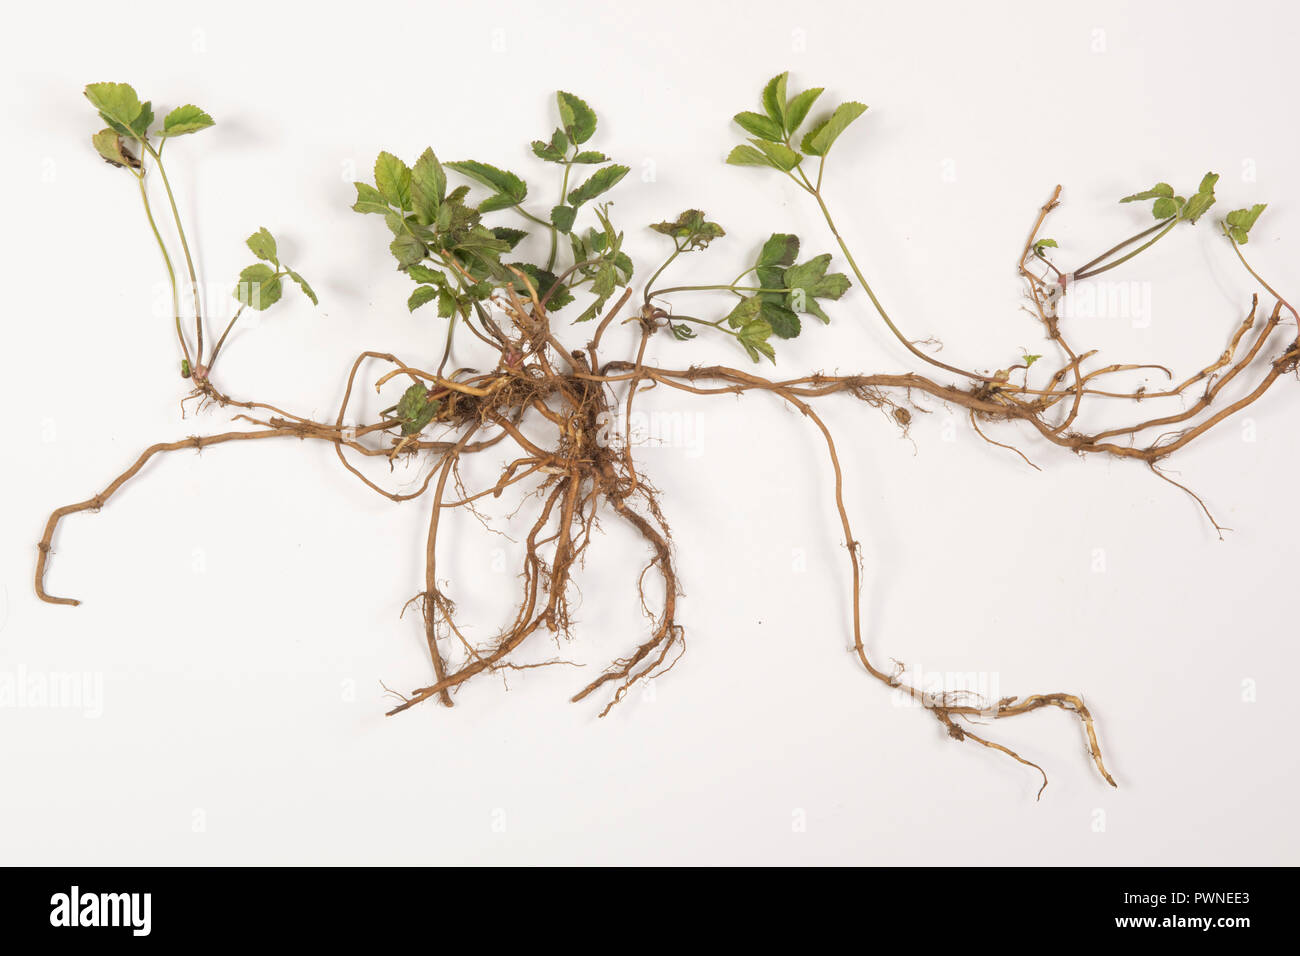 Ground elder, Aegopodium podagraria, plant from a vegetable patch sampled to show creeping rhizomatous roots Stock Photo